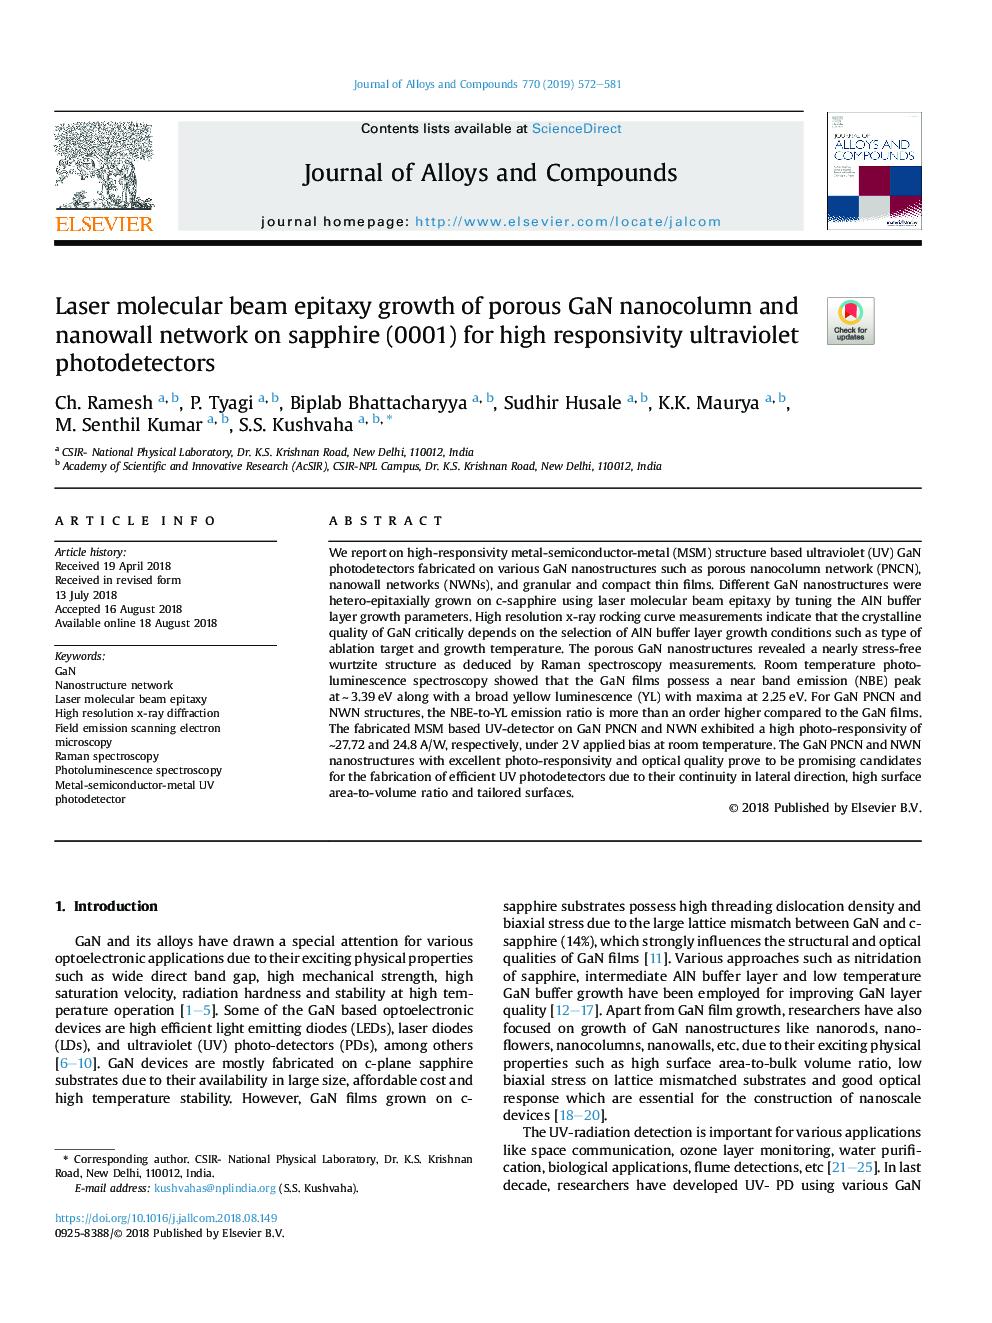 Laser molecular beam epitaxy growth of porous GaN nanocolumn and nanowall network on sapphire (0001) for high responsivity ultraviolet photodetectors